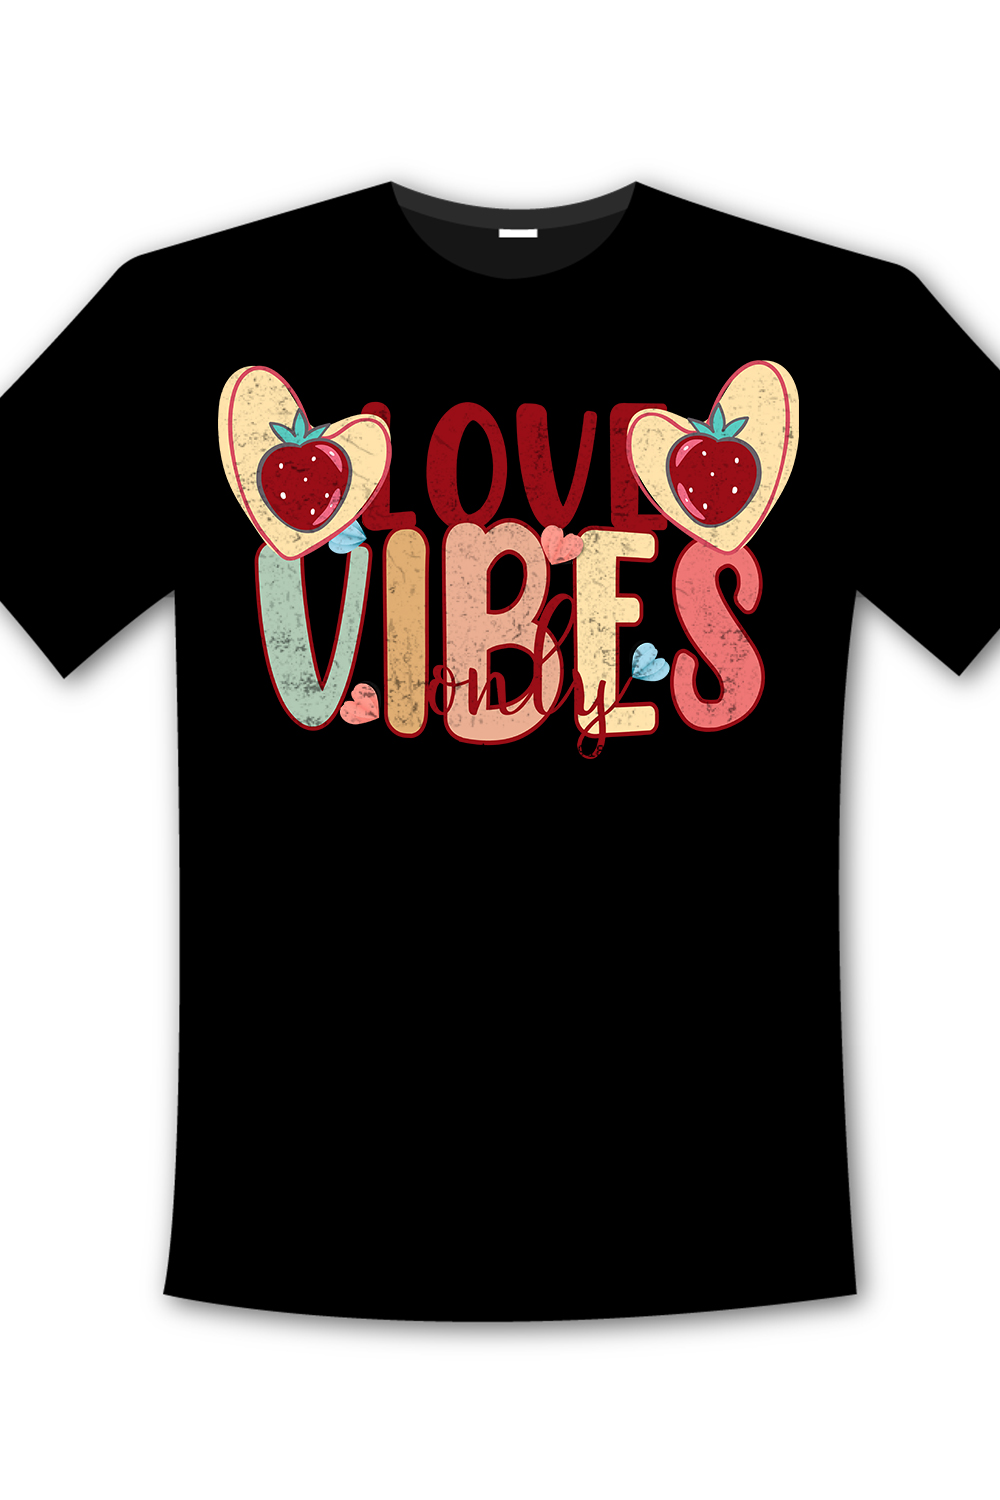 Retro Valentine’s Day T-Shirt Design - Pinterest.